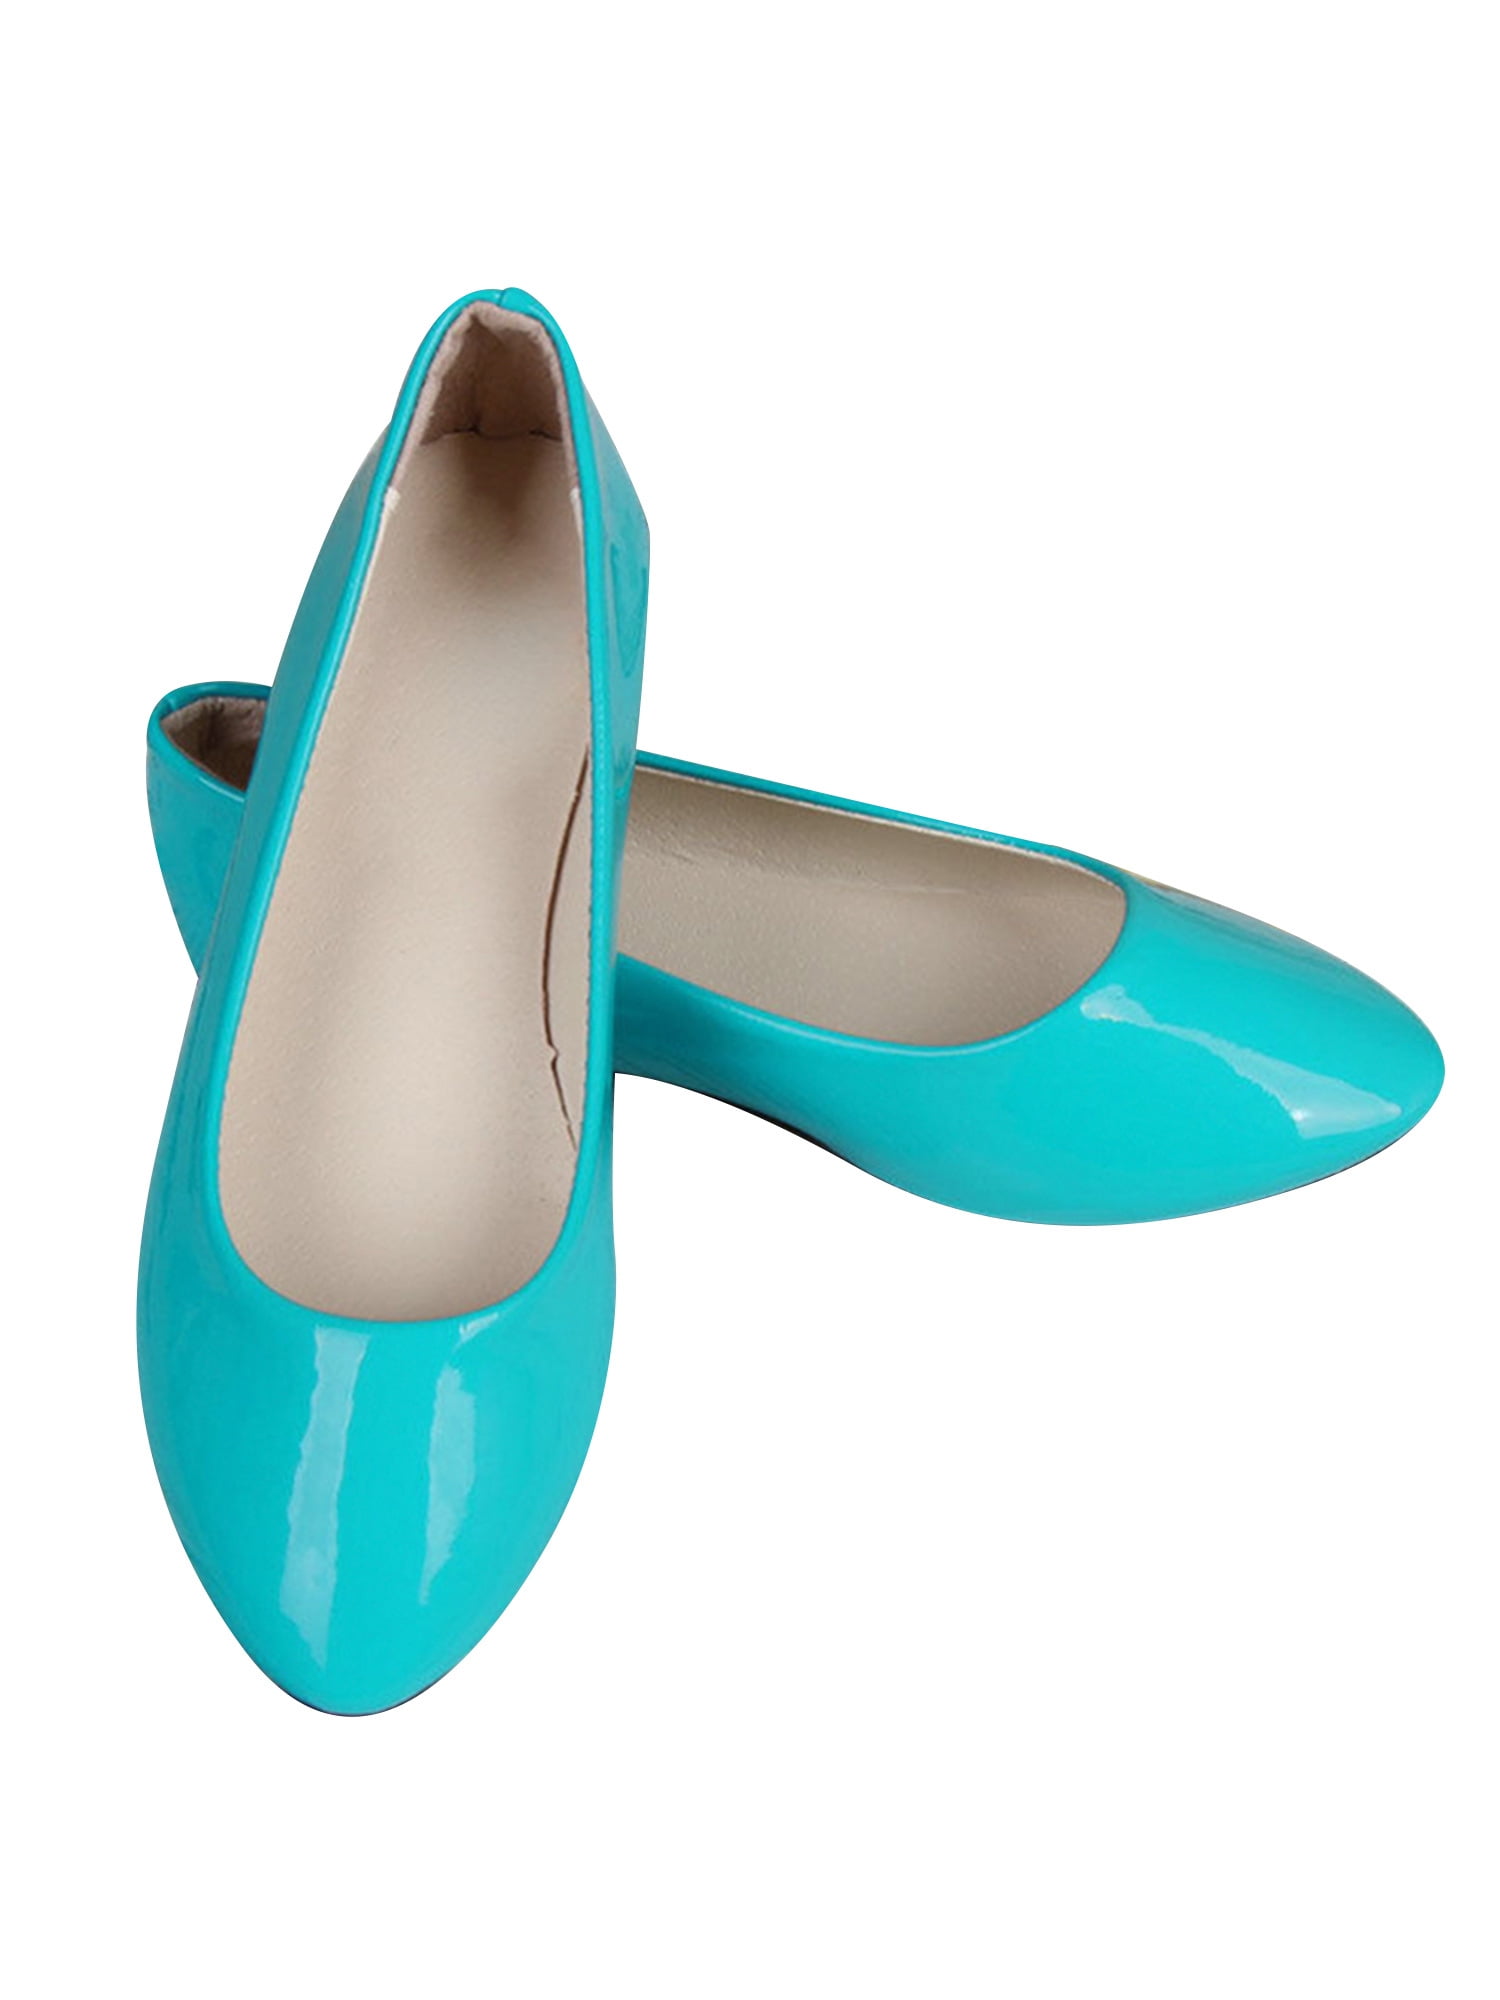 Women Flats Pumps Ladies Casual Ballet Ballerina Dolly Bridal Boat Shoes Comfy 6 